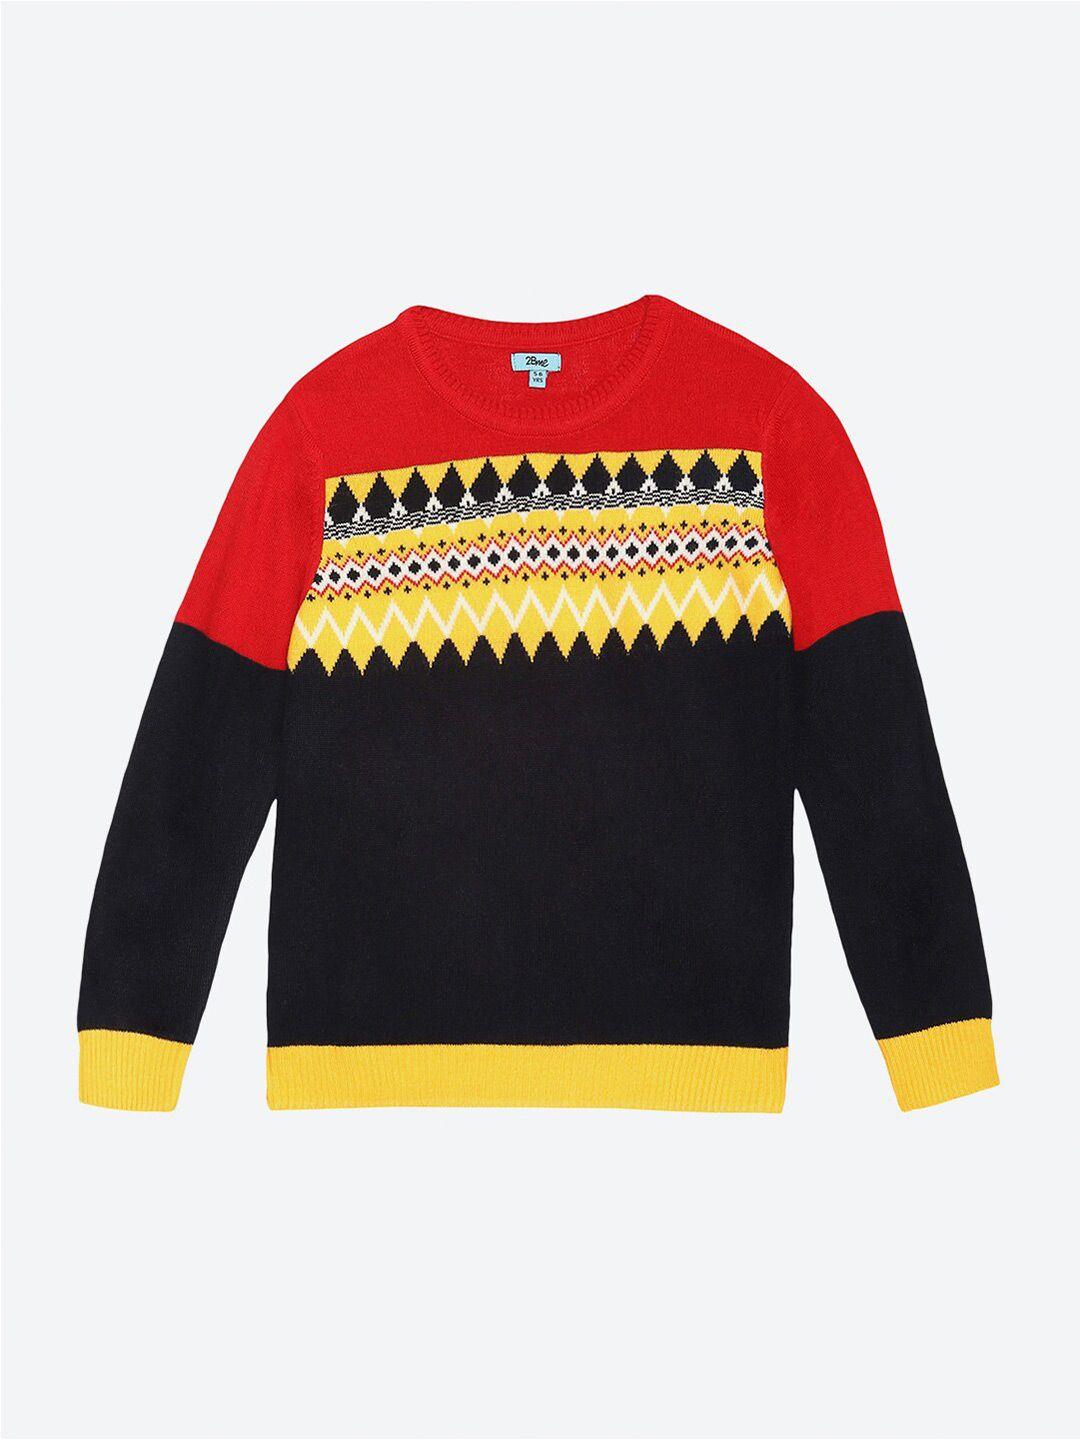 2bme boys fair isle printed acrylic pullover sweater